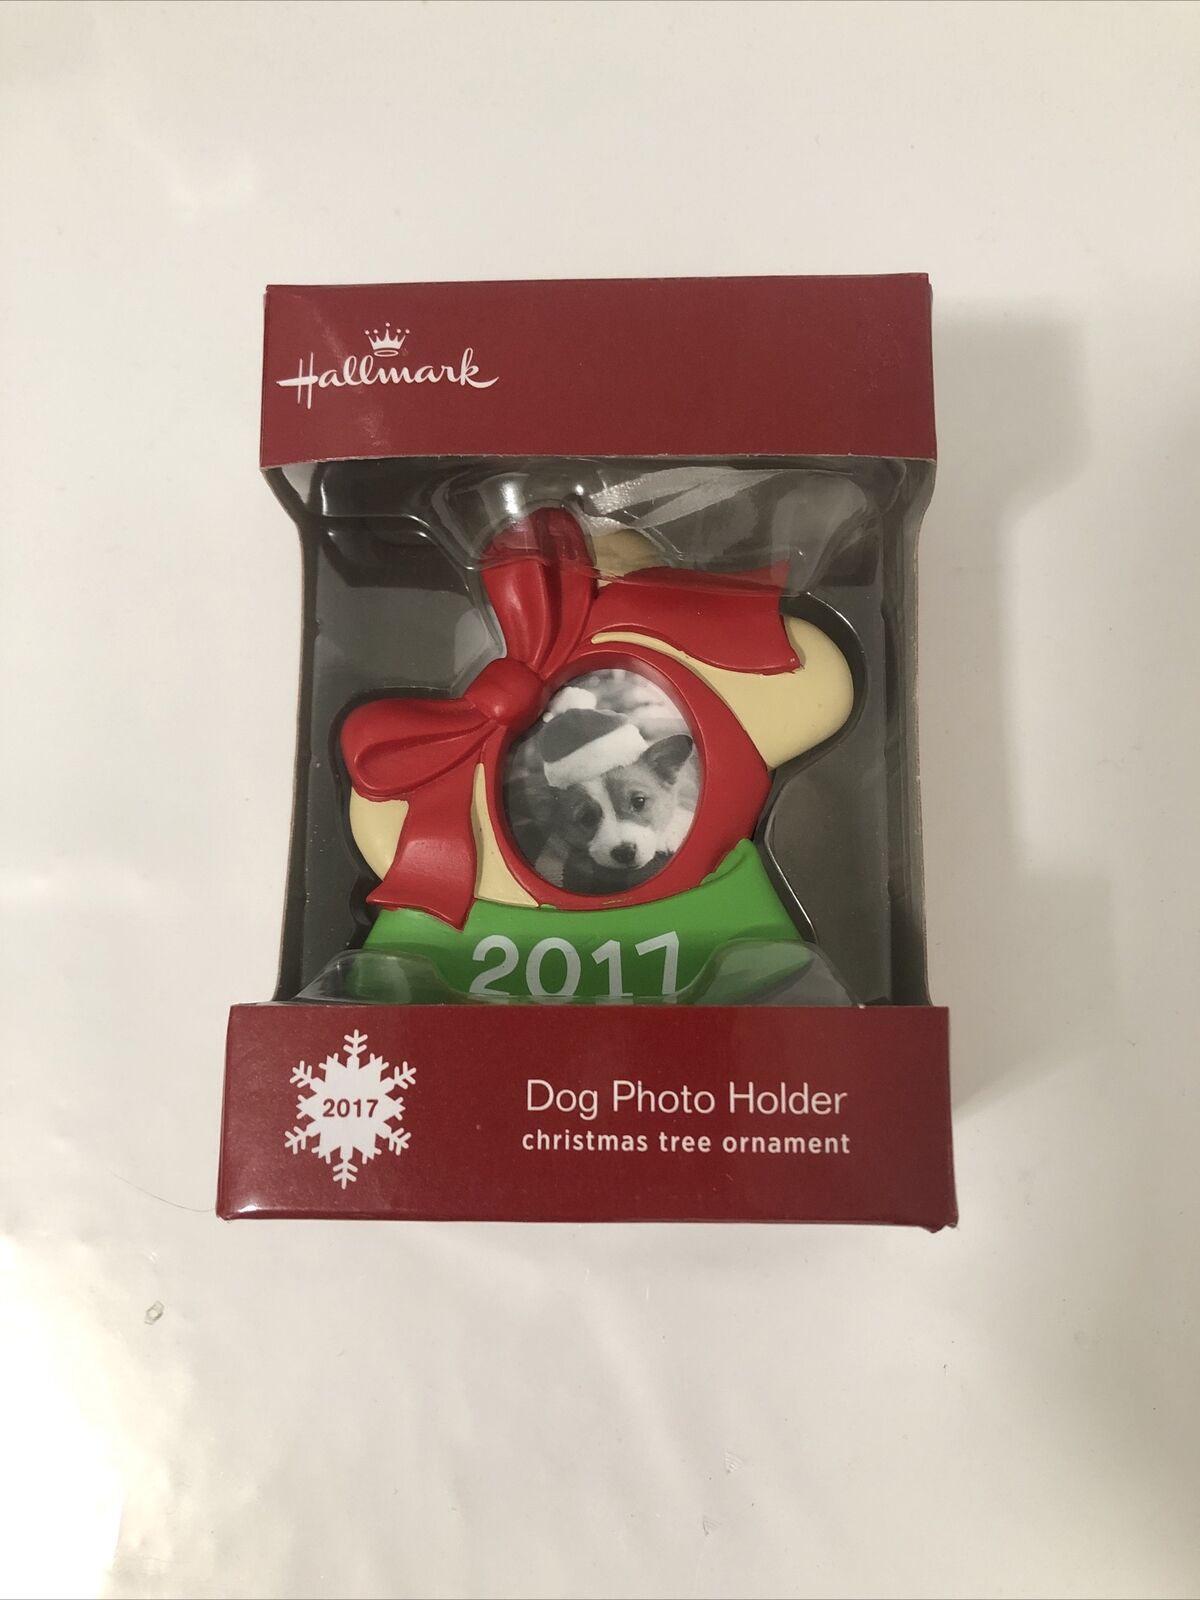 Hallmark Dog Puppy Photo Holder 2017 Christmas Tree Ornament